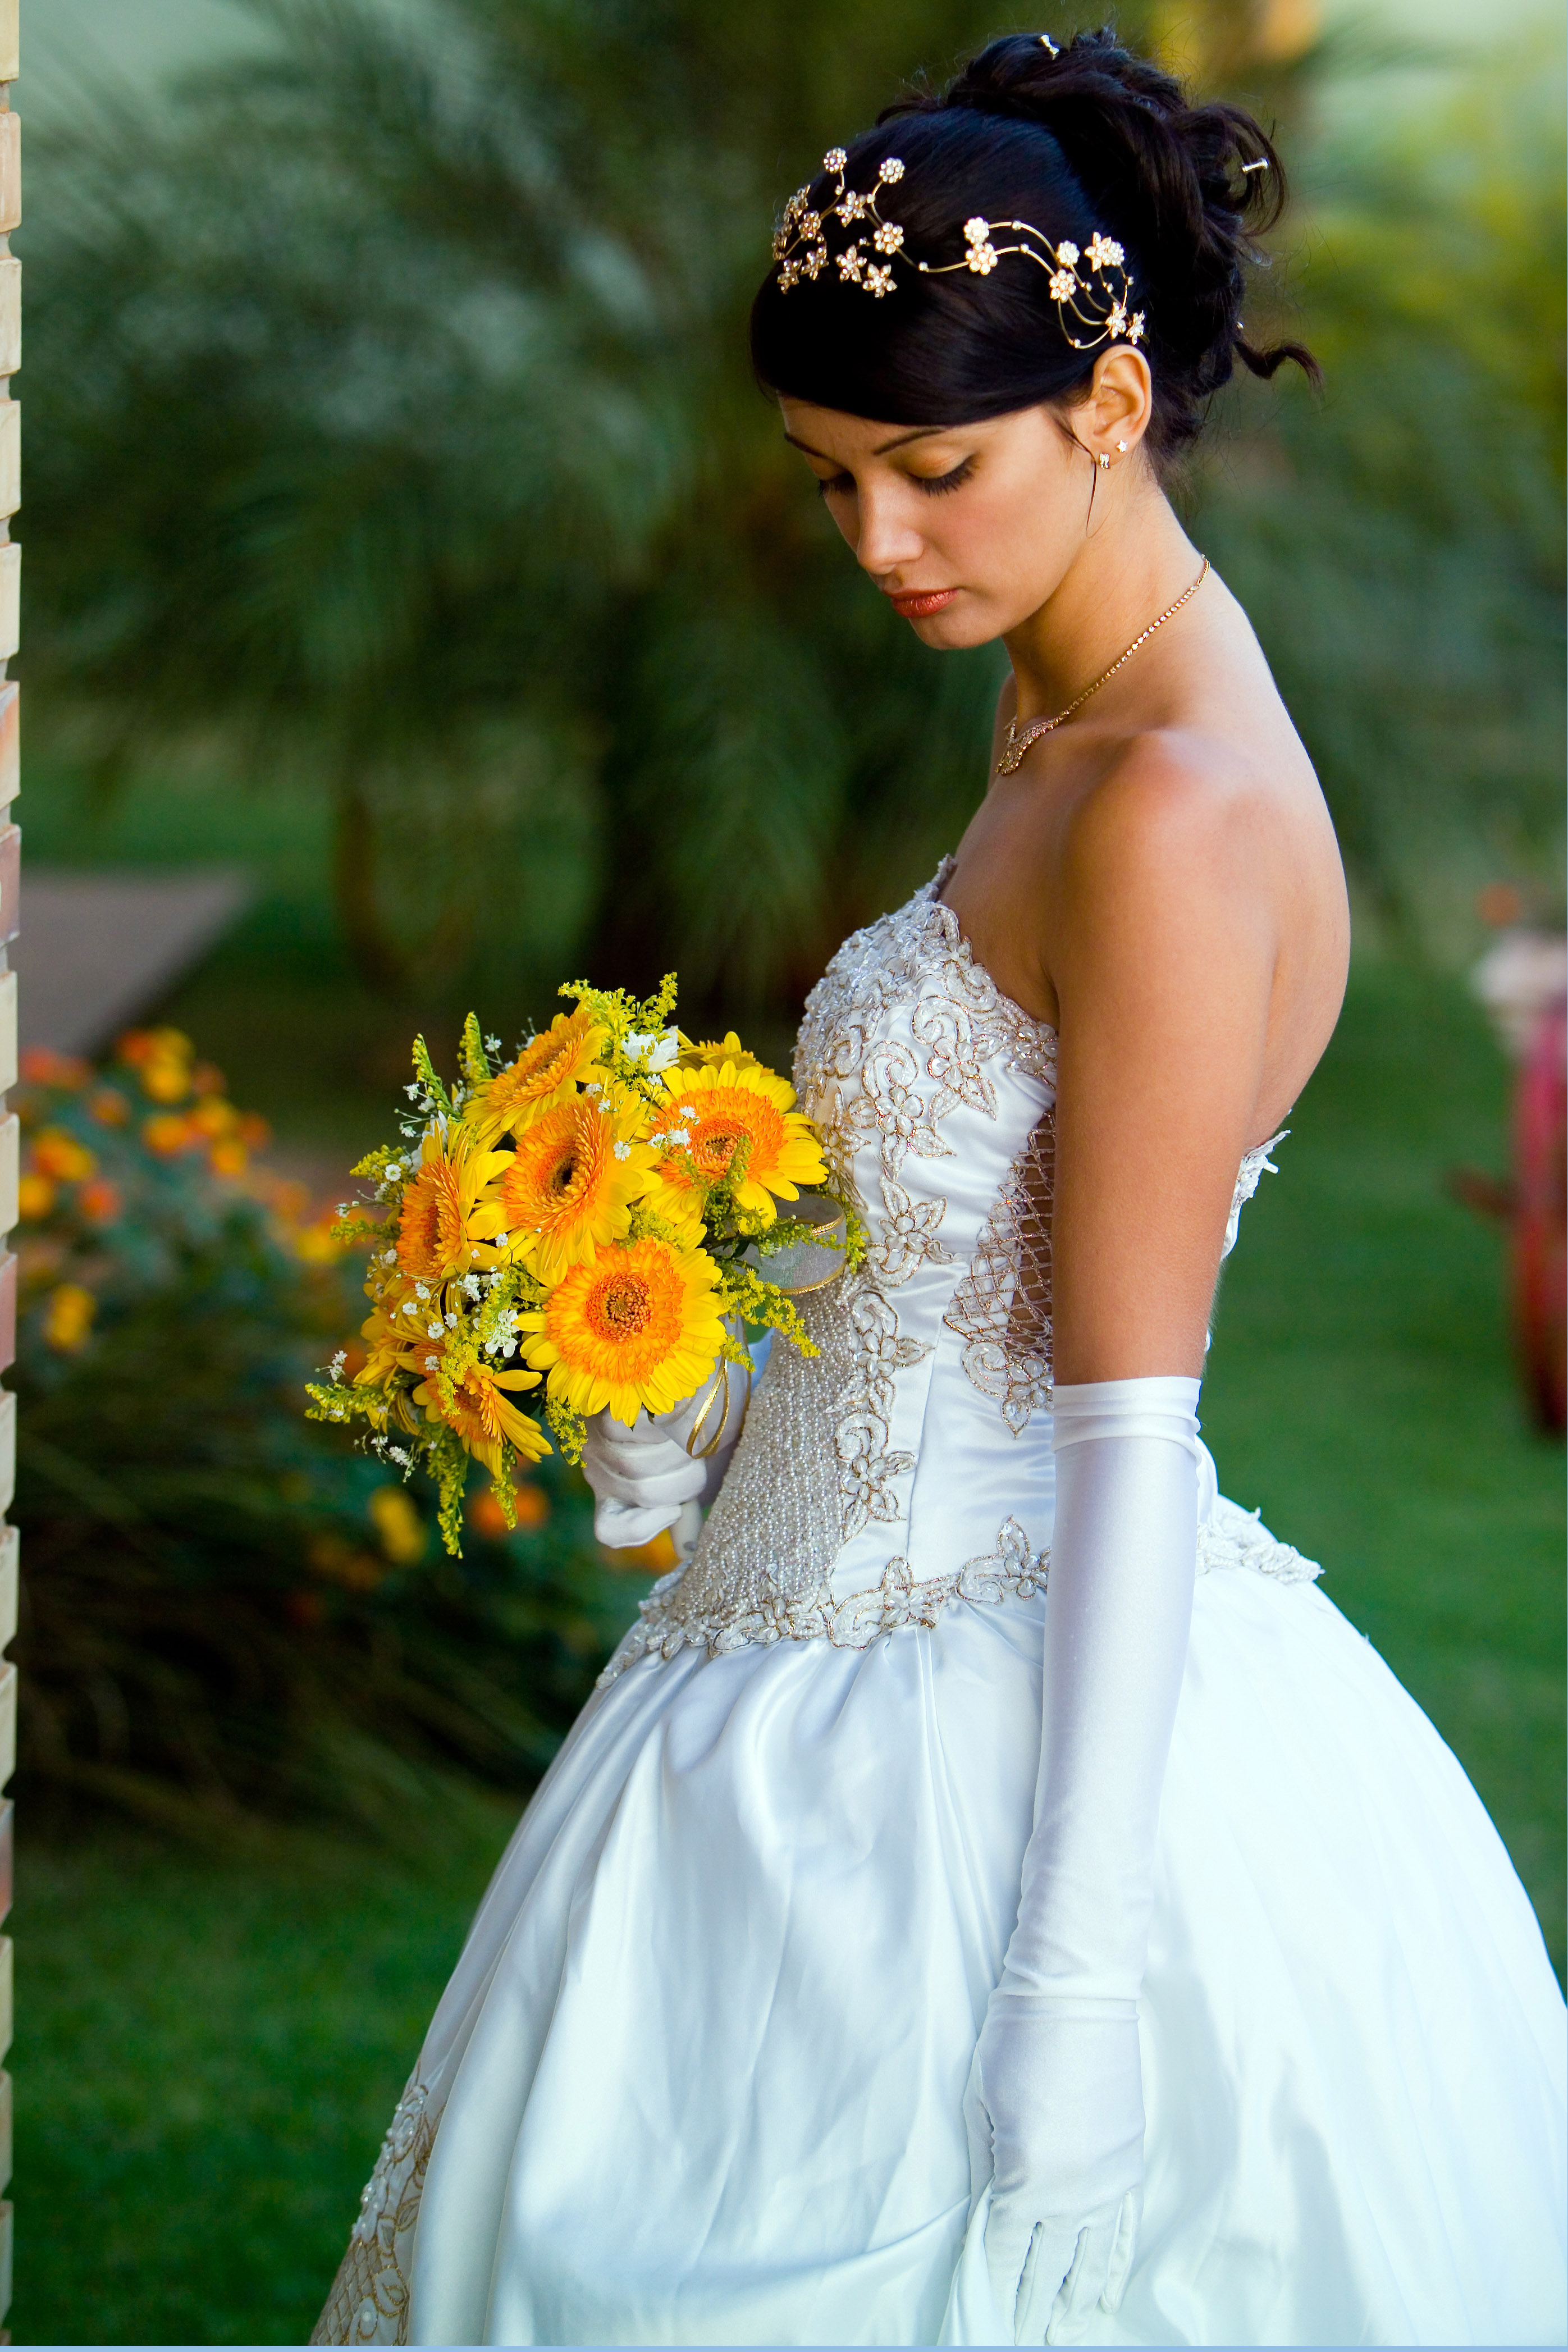 Plus-size bride in wedding dress